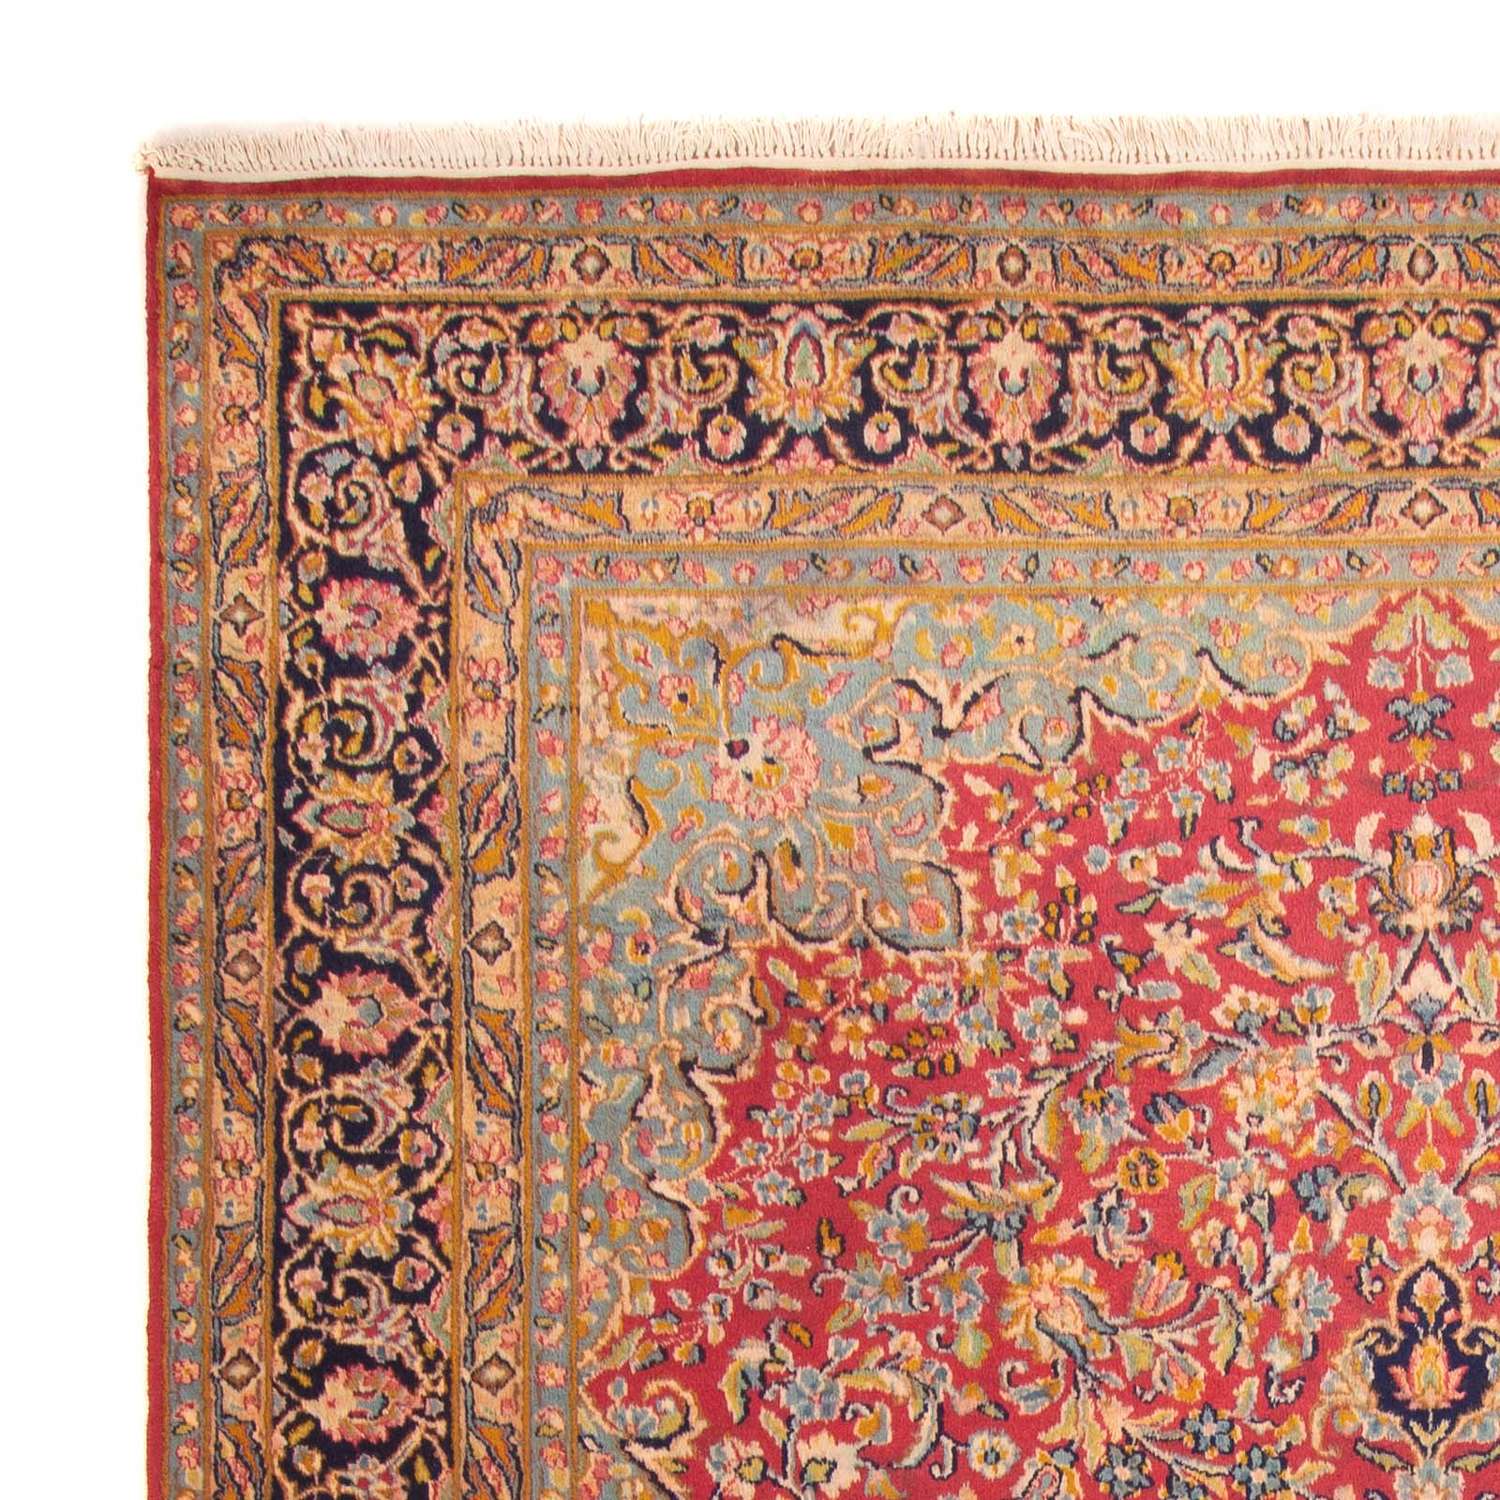 Tapis persan - Classique - 340 x 243 cm - rouge